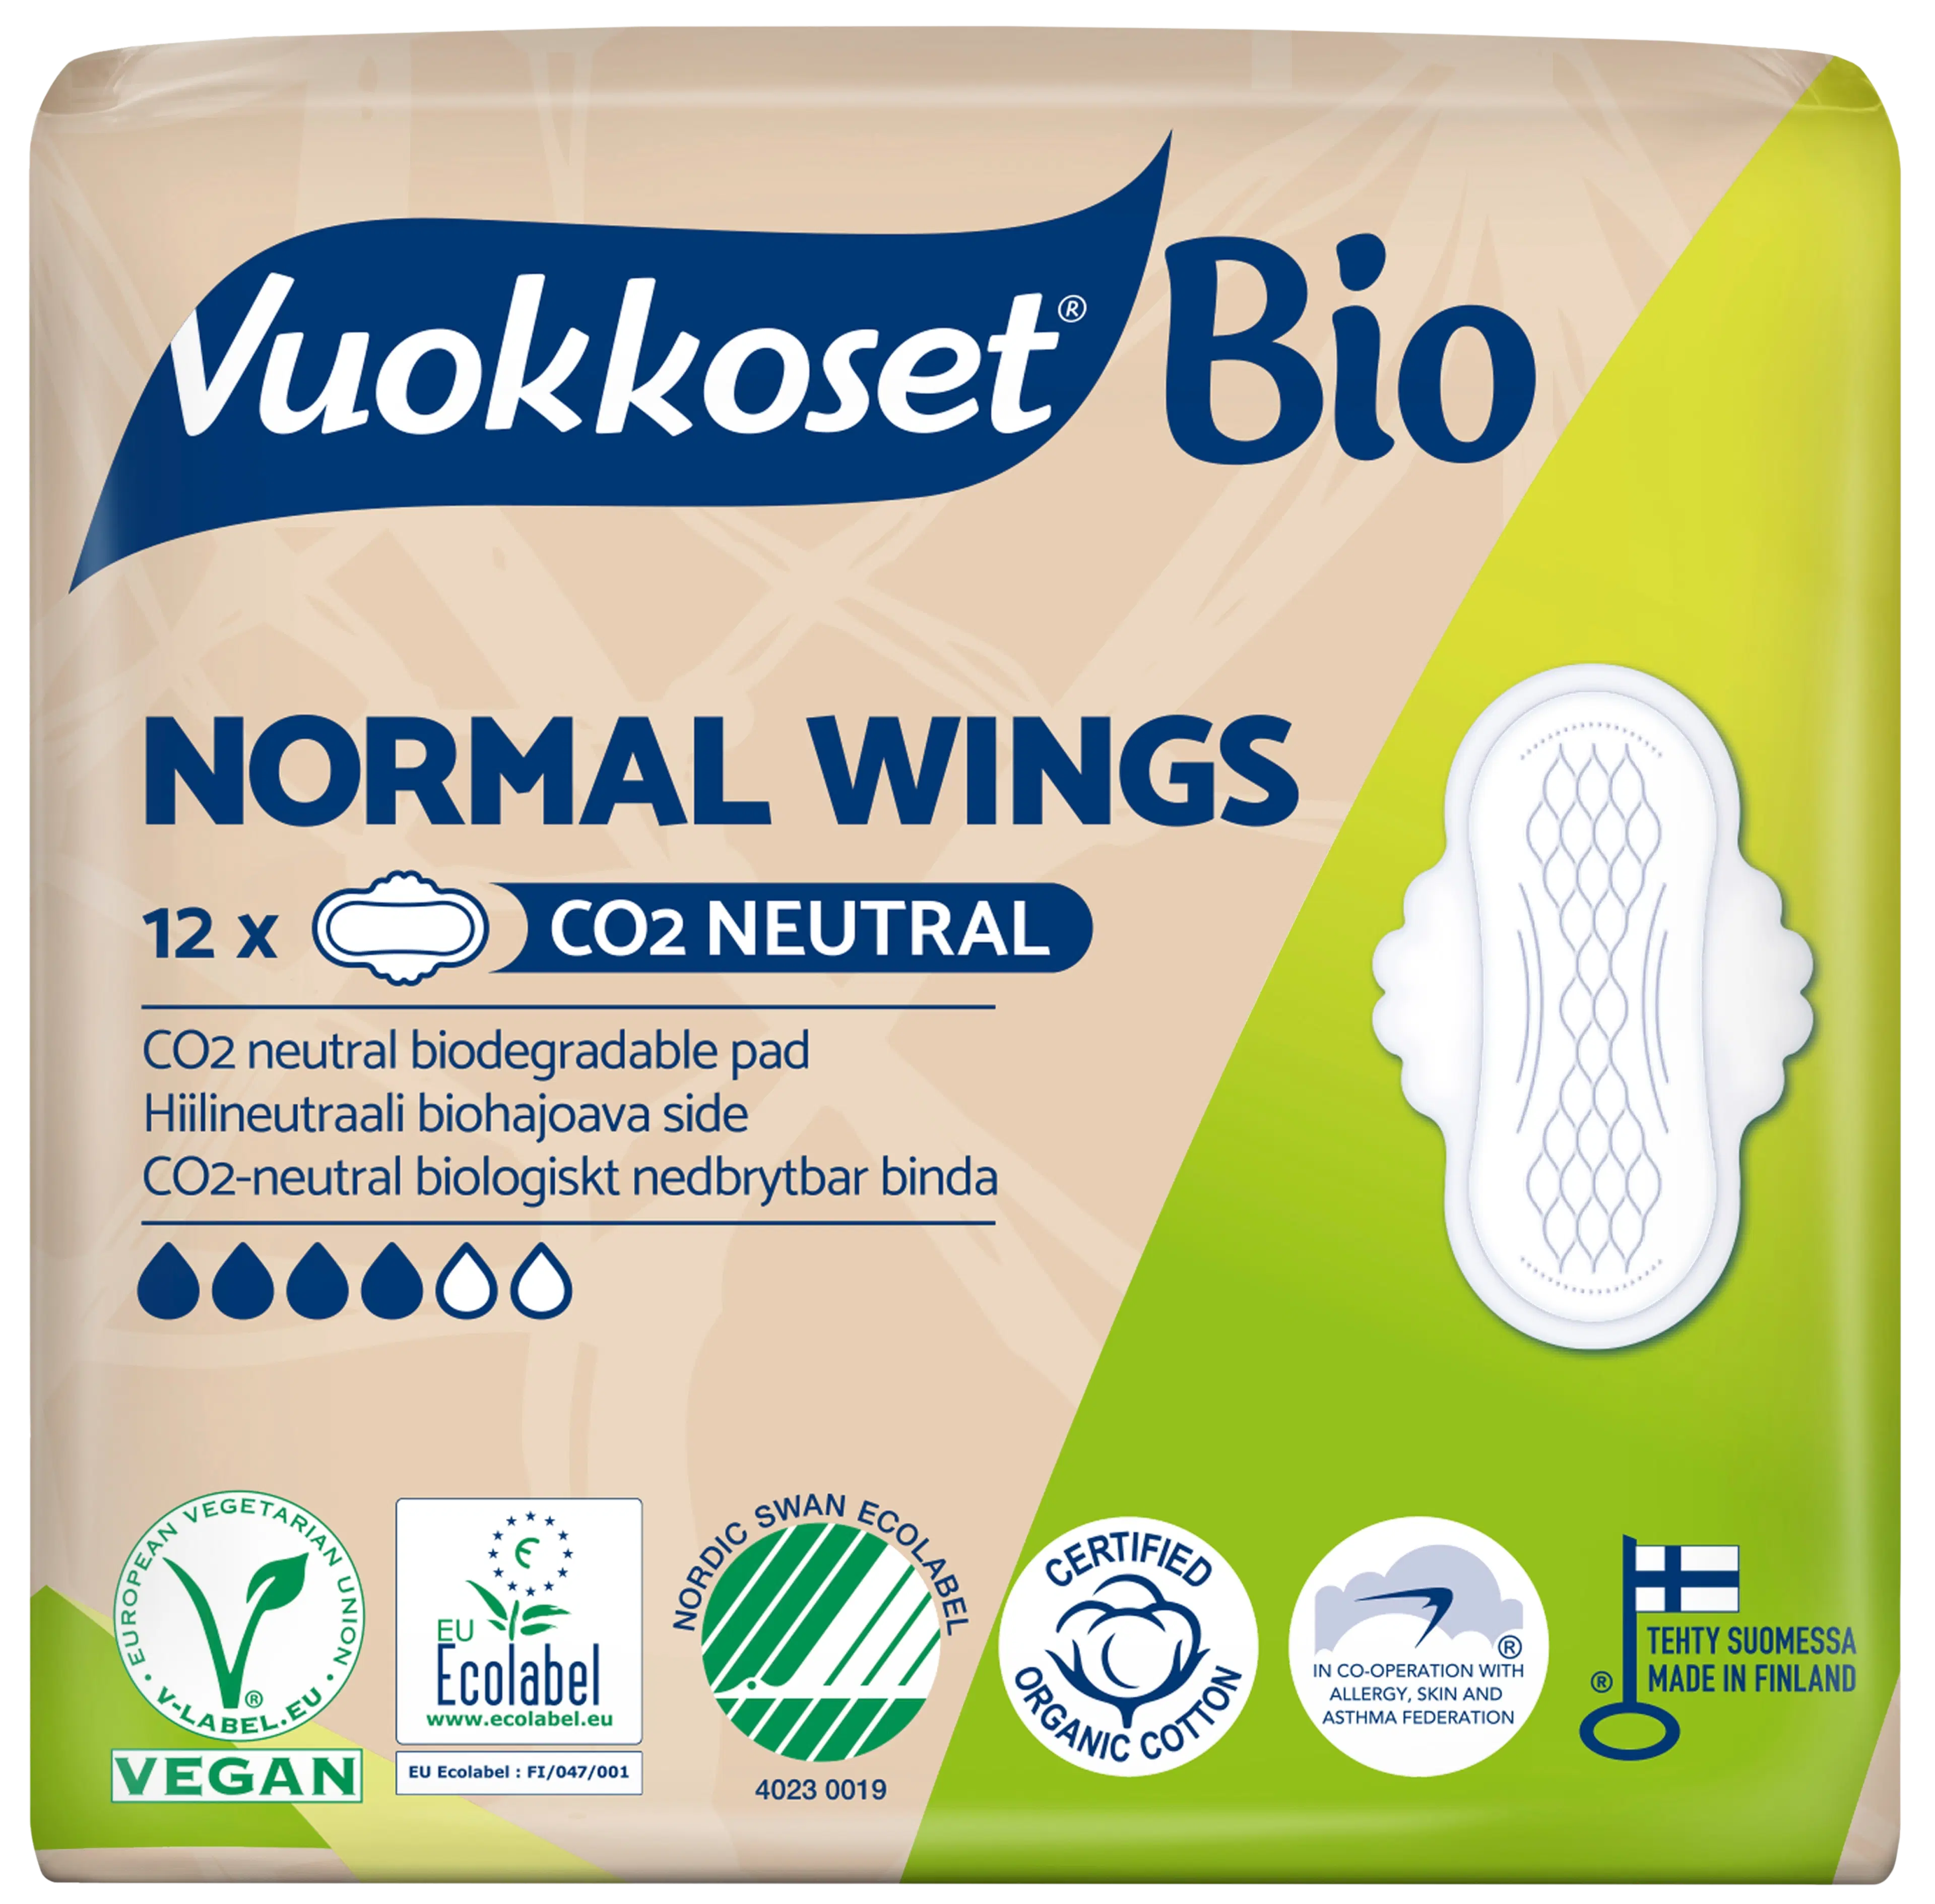 Vuokkoset Bio Normal Wings ohutside 12 kpl